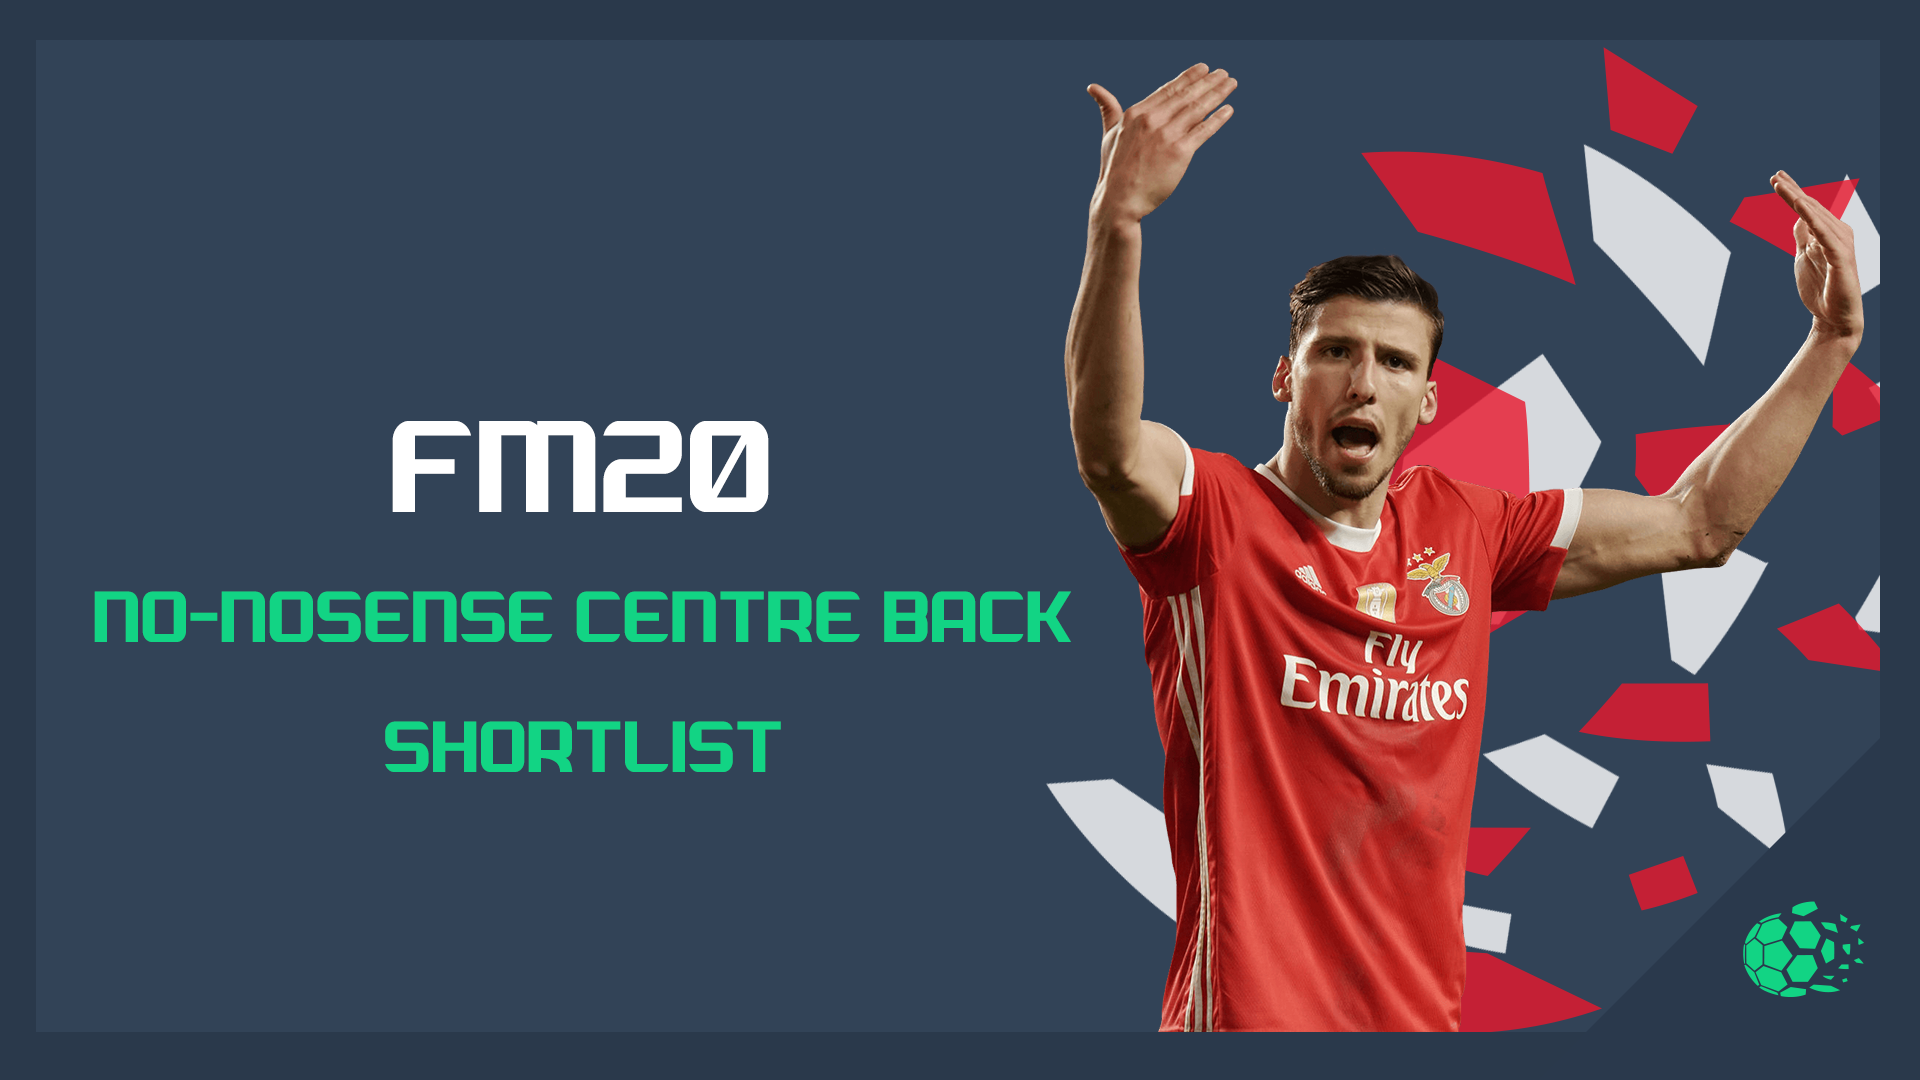 FM20 FM20 - No-Nonsense Centre Back Shortlist